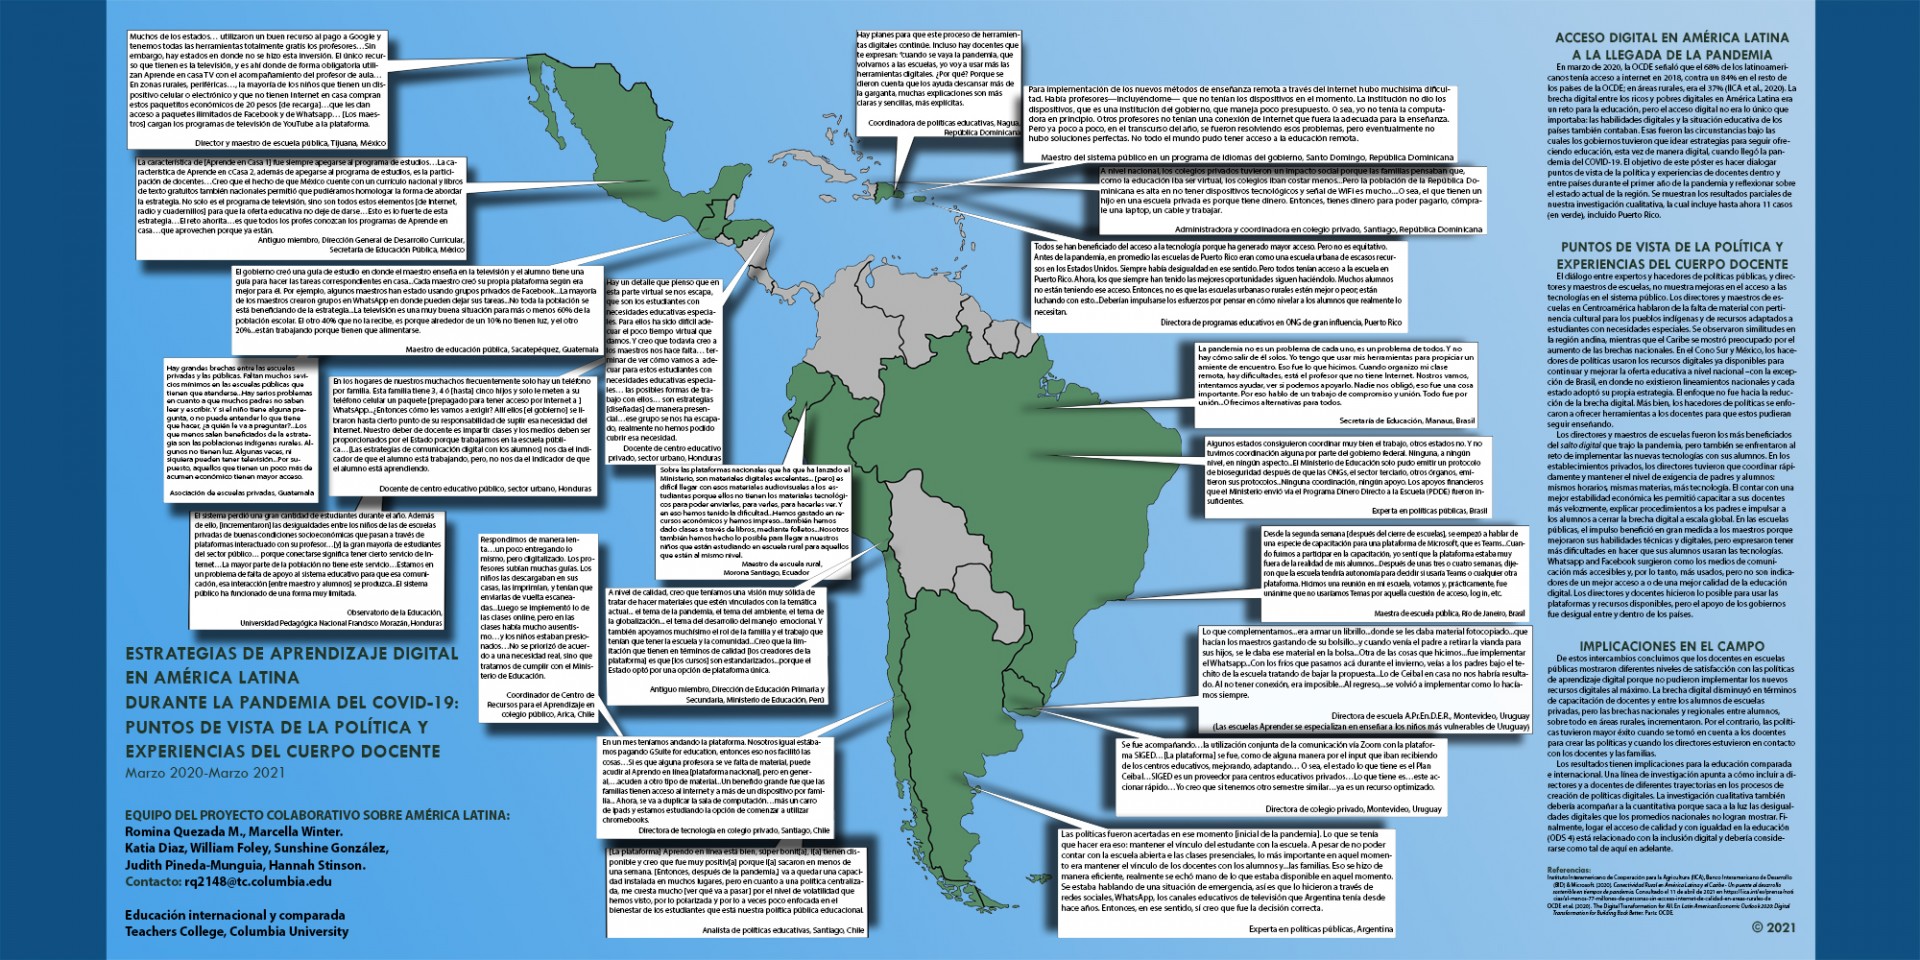 Map in Spanish